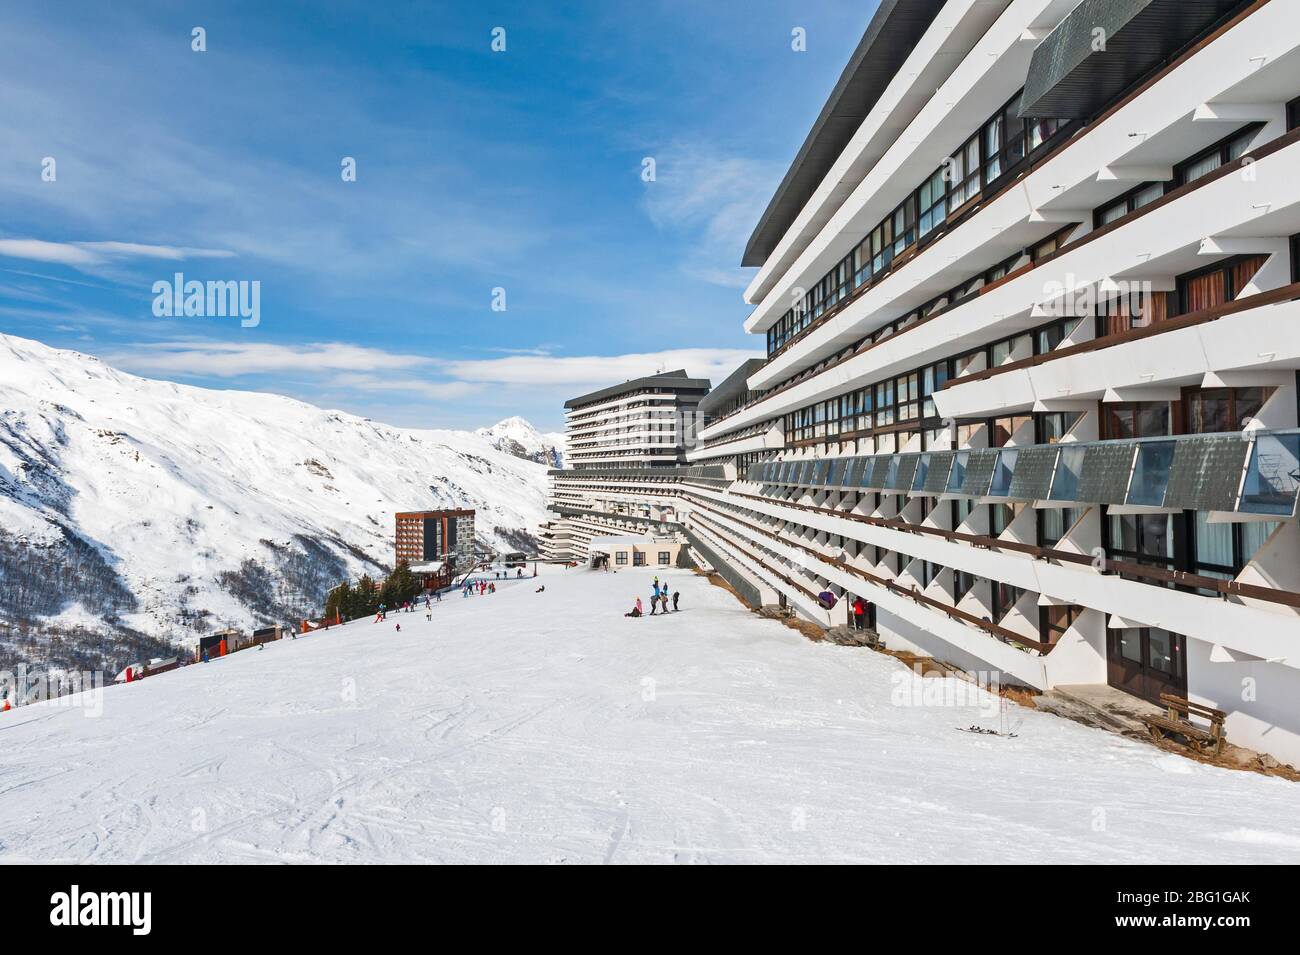 Large hotel on mountain piste ski slope with balcony in alpine ski resort Stock Photo